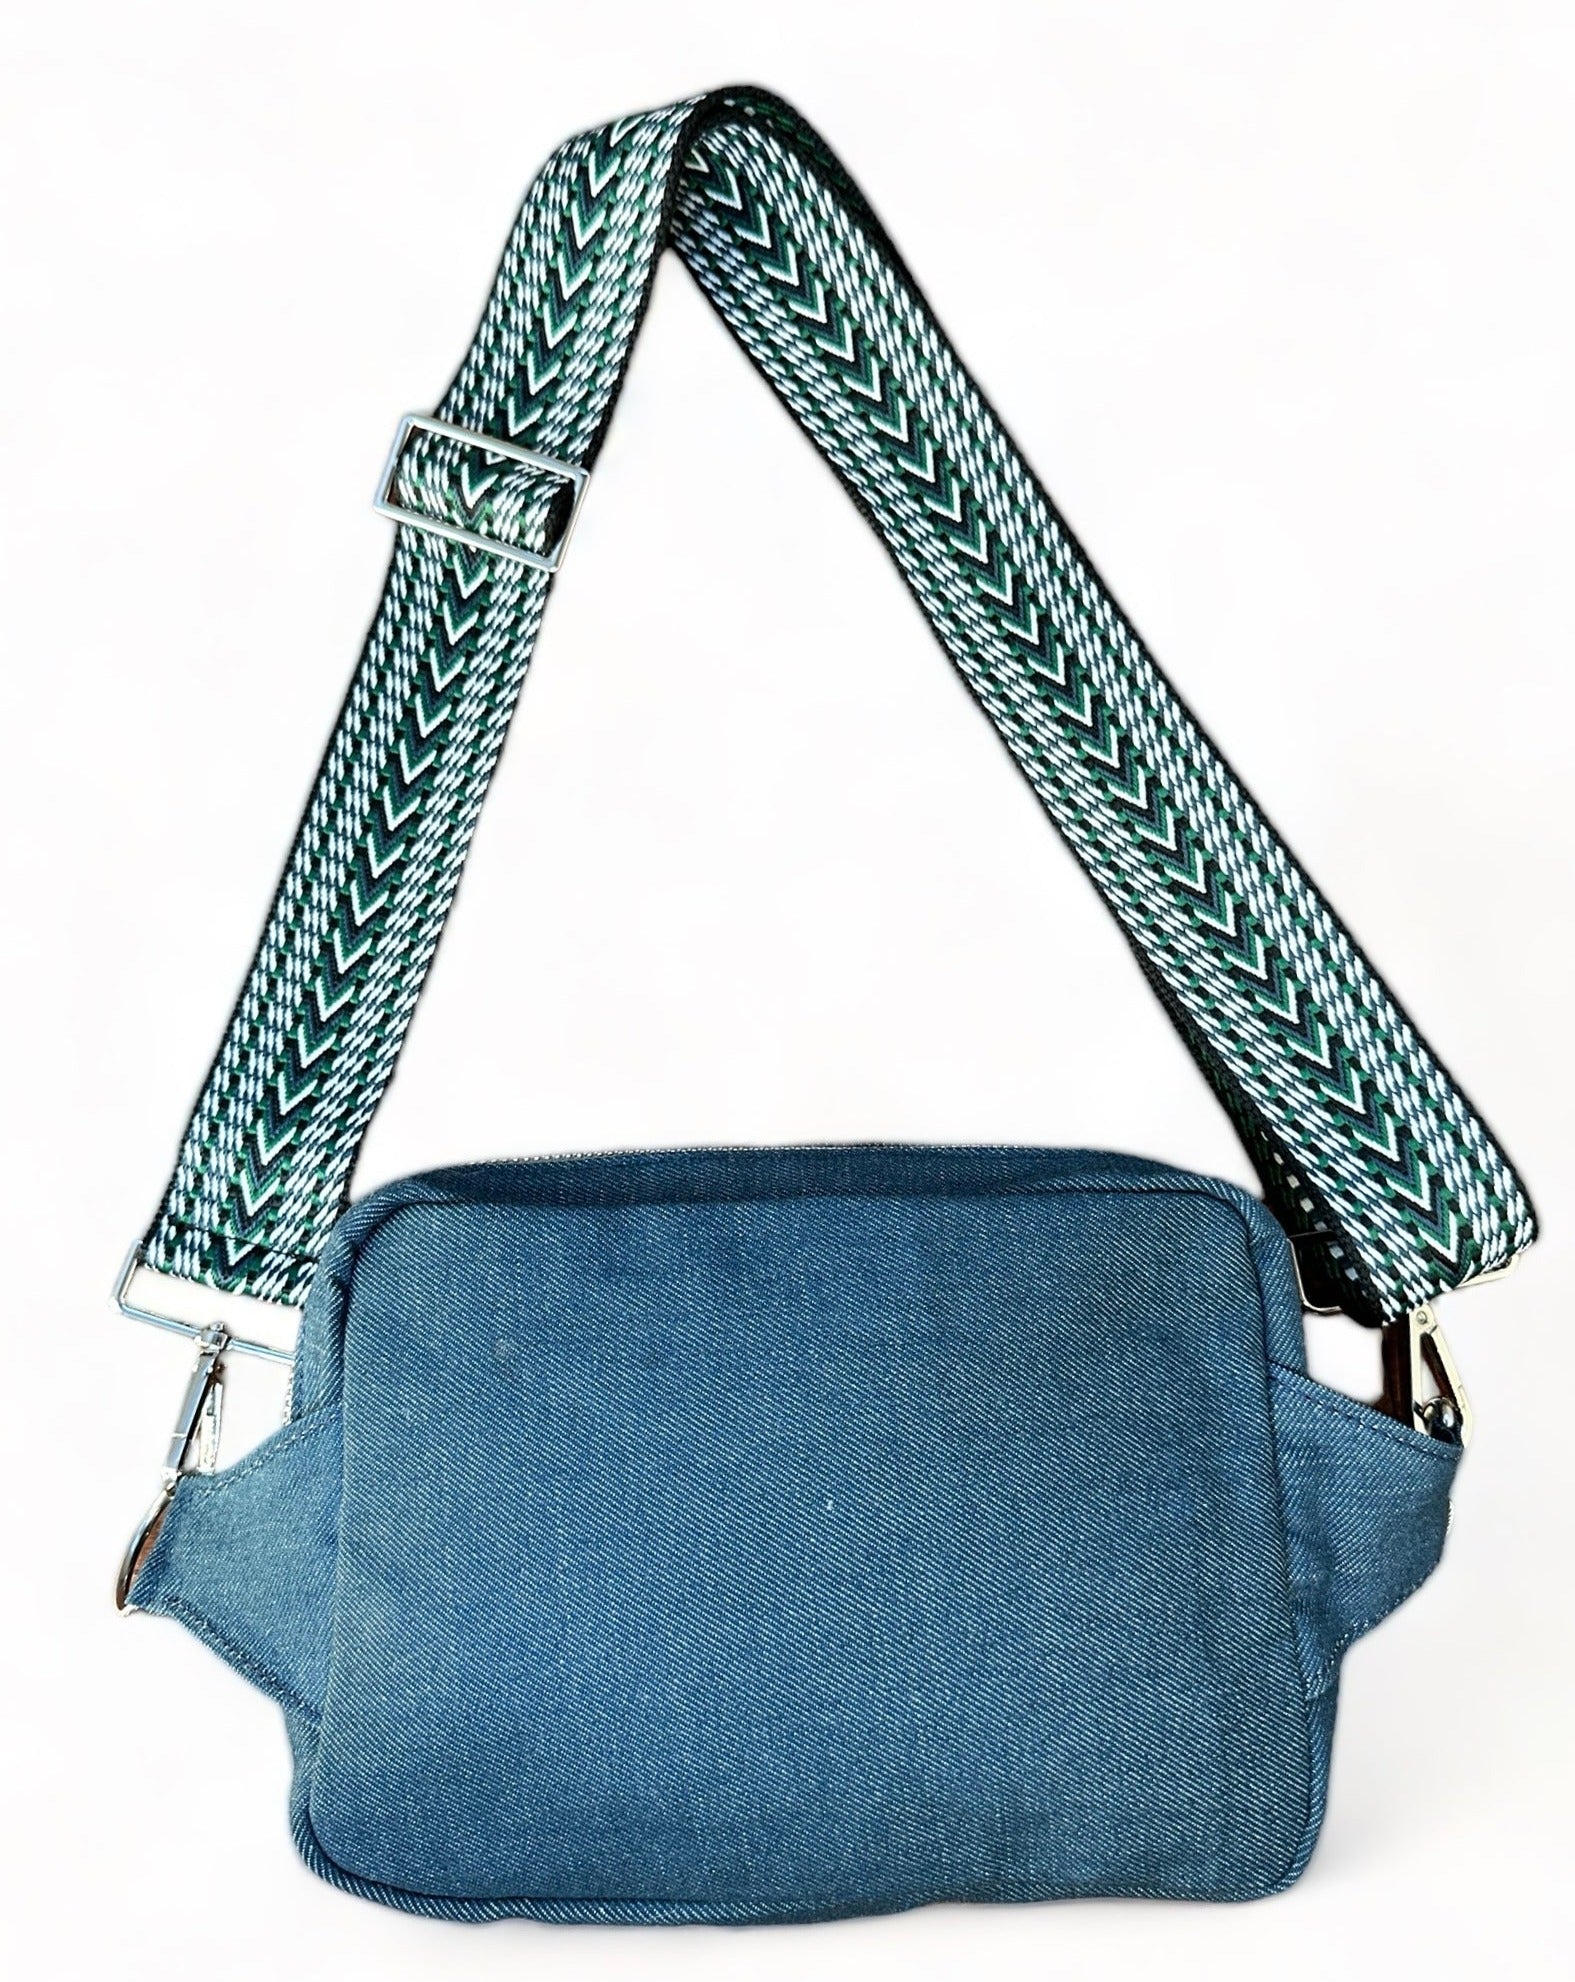 Unisex Denim sling crossbody bag, your perfect travel companion.